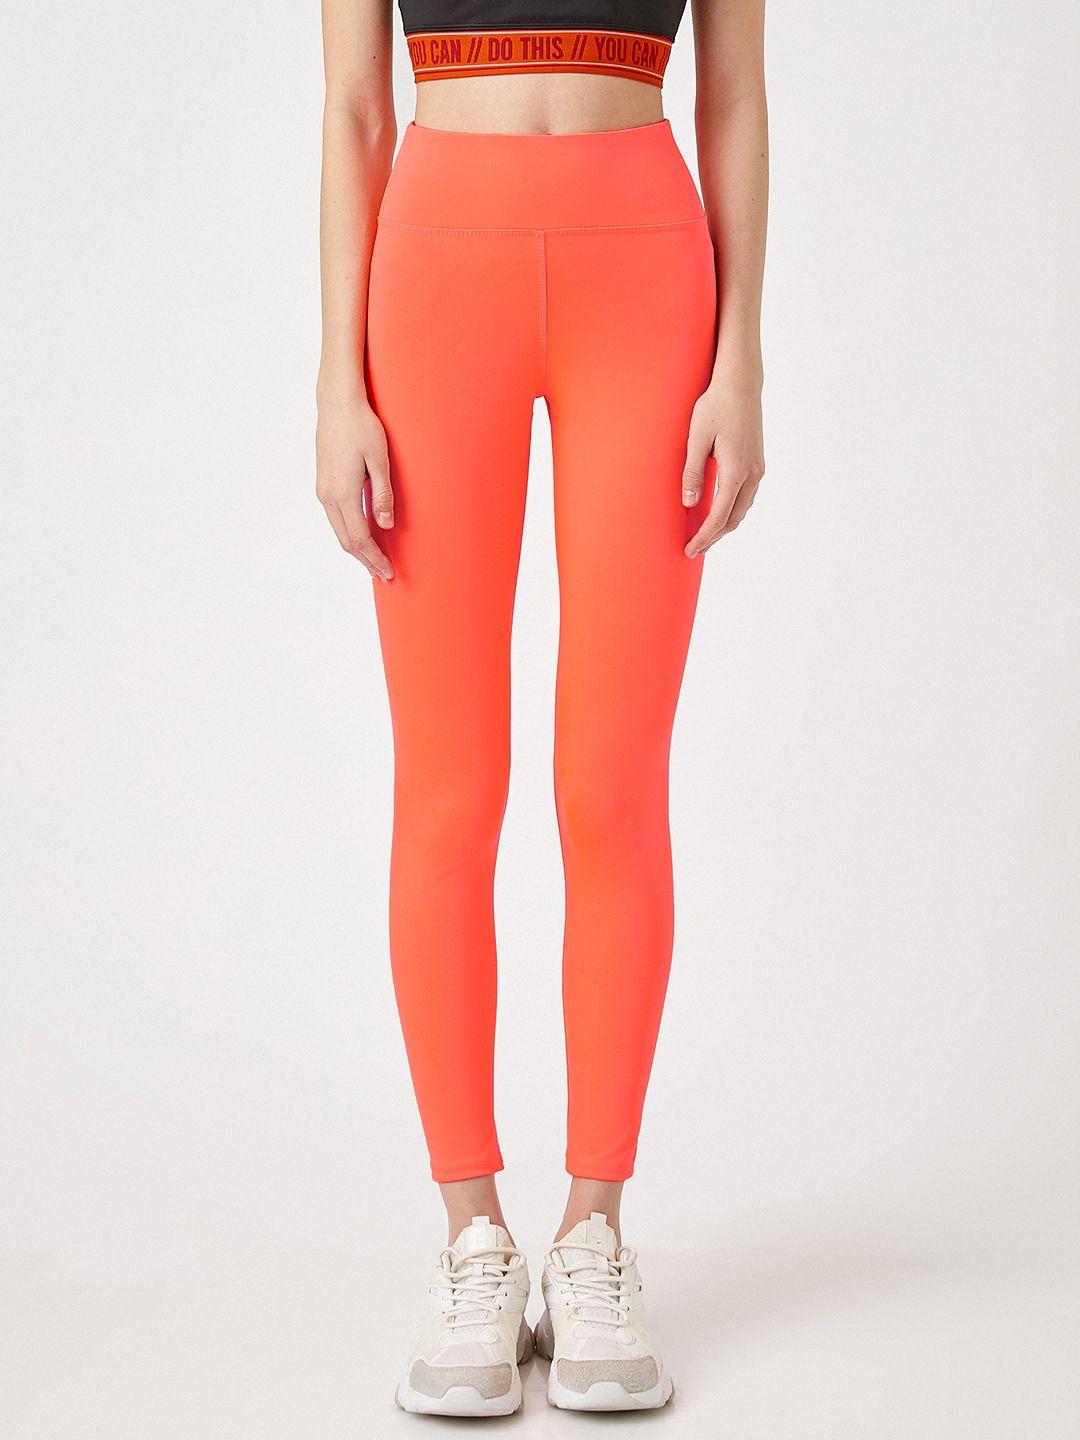 koton women neon orange solid ankle length tights